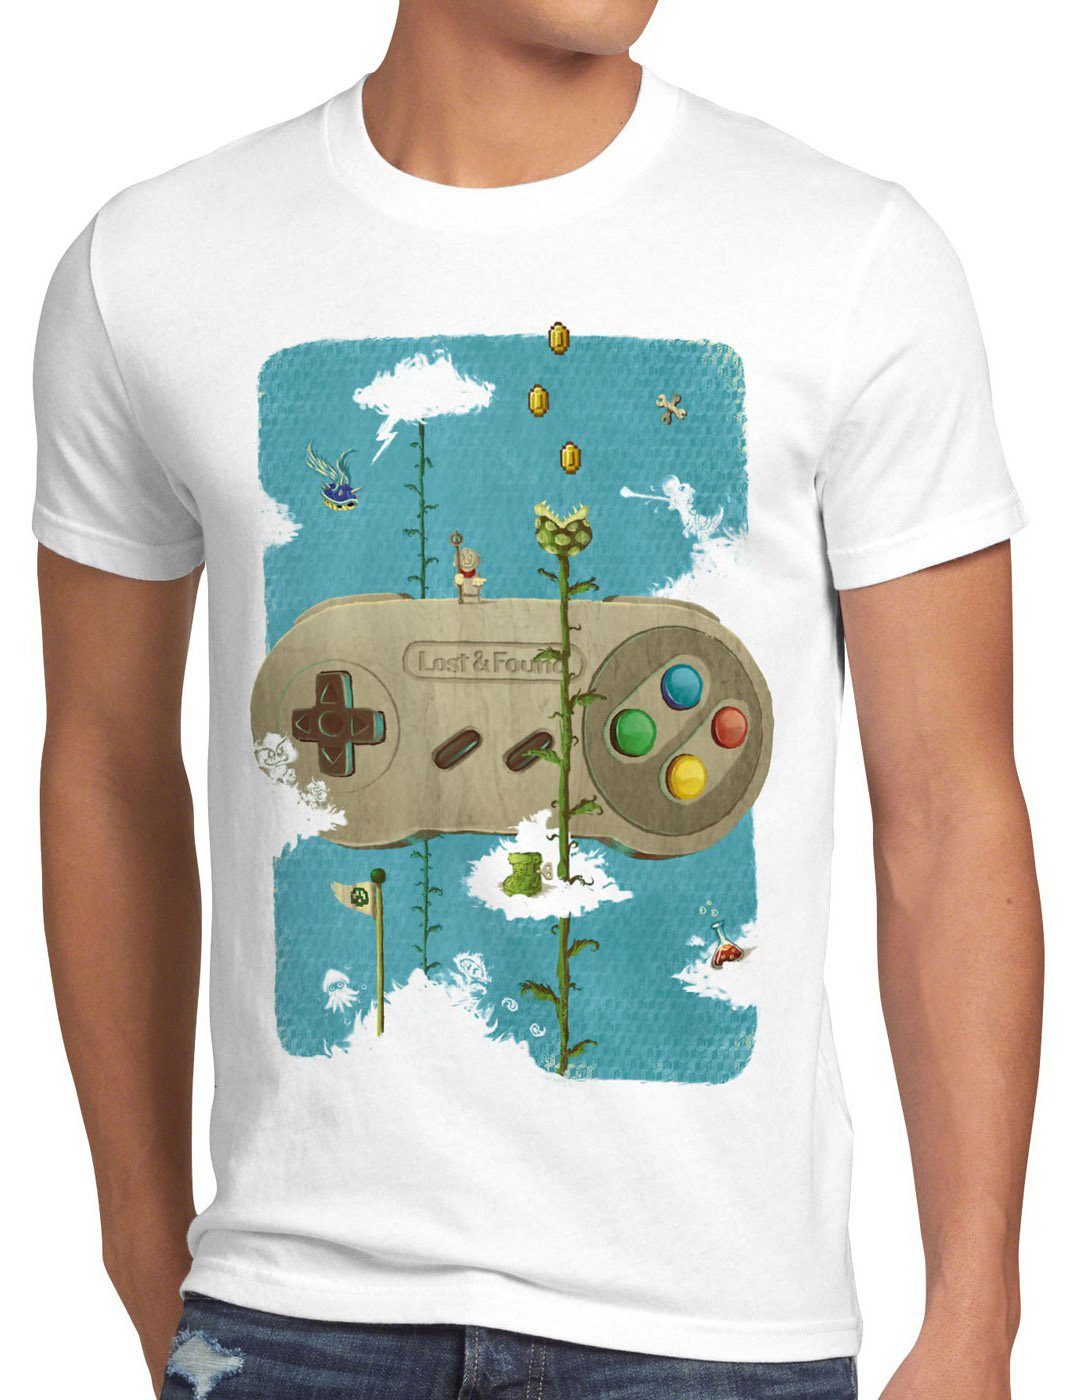 Classic super Print-Shirt konsole Bit style3 kart T-Shirt weiß snes nintendo 16 retro Herren Gamer mario